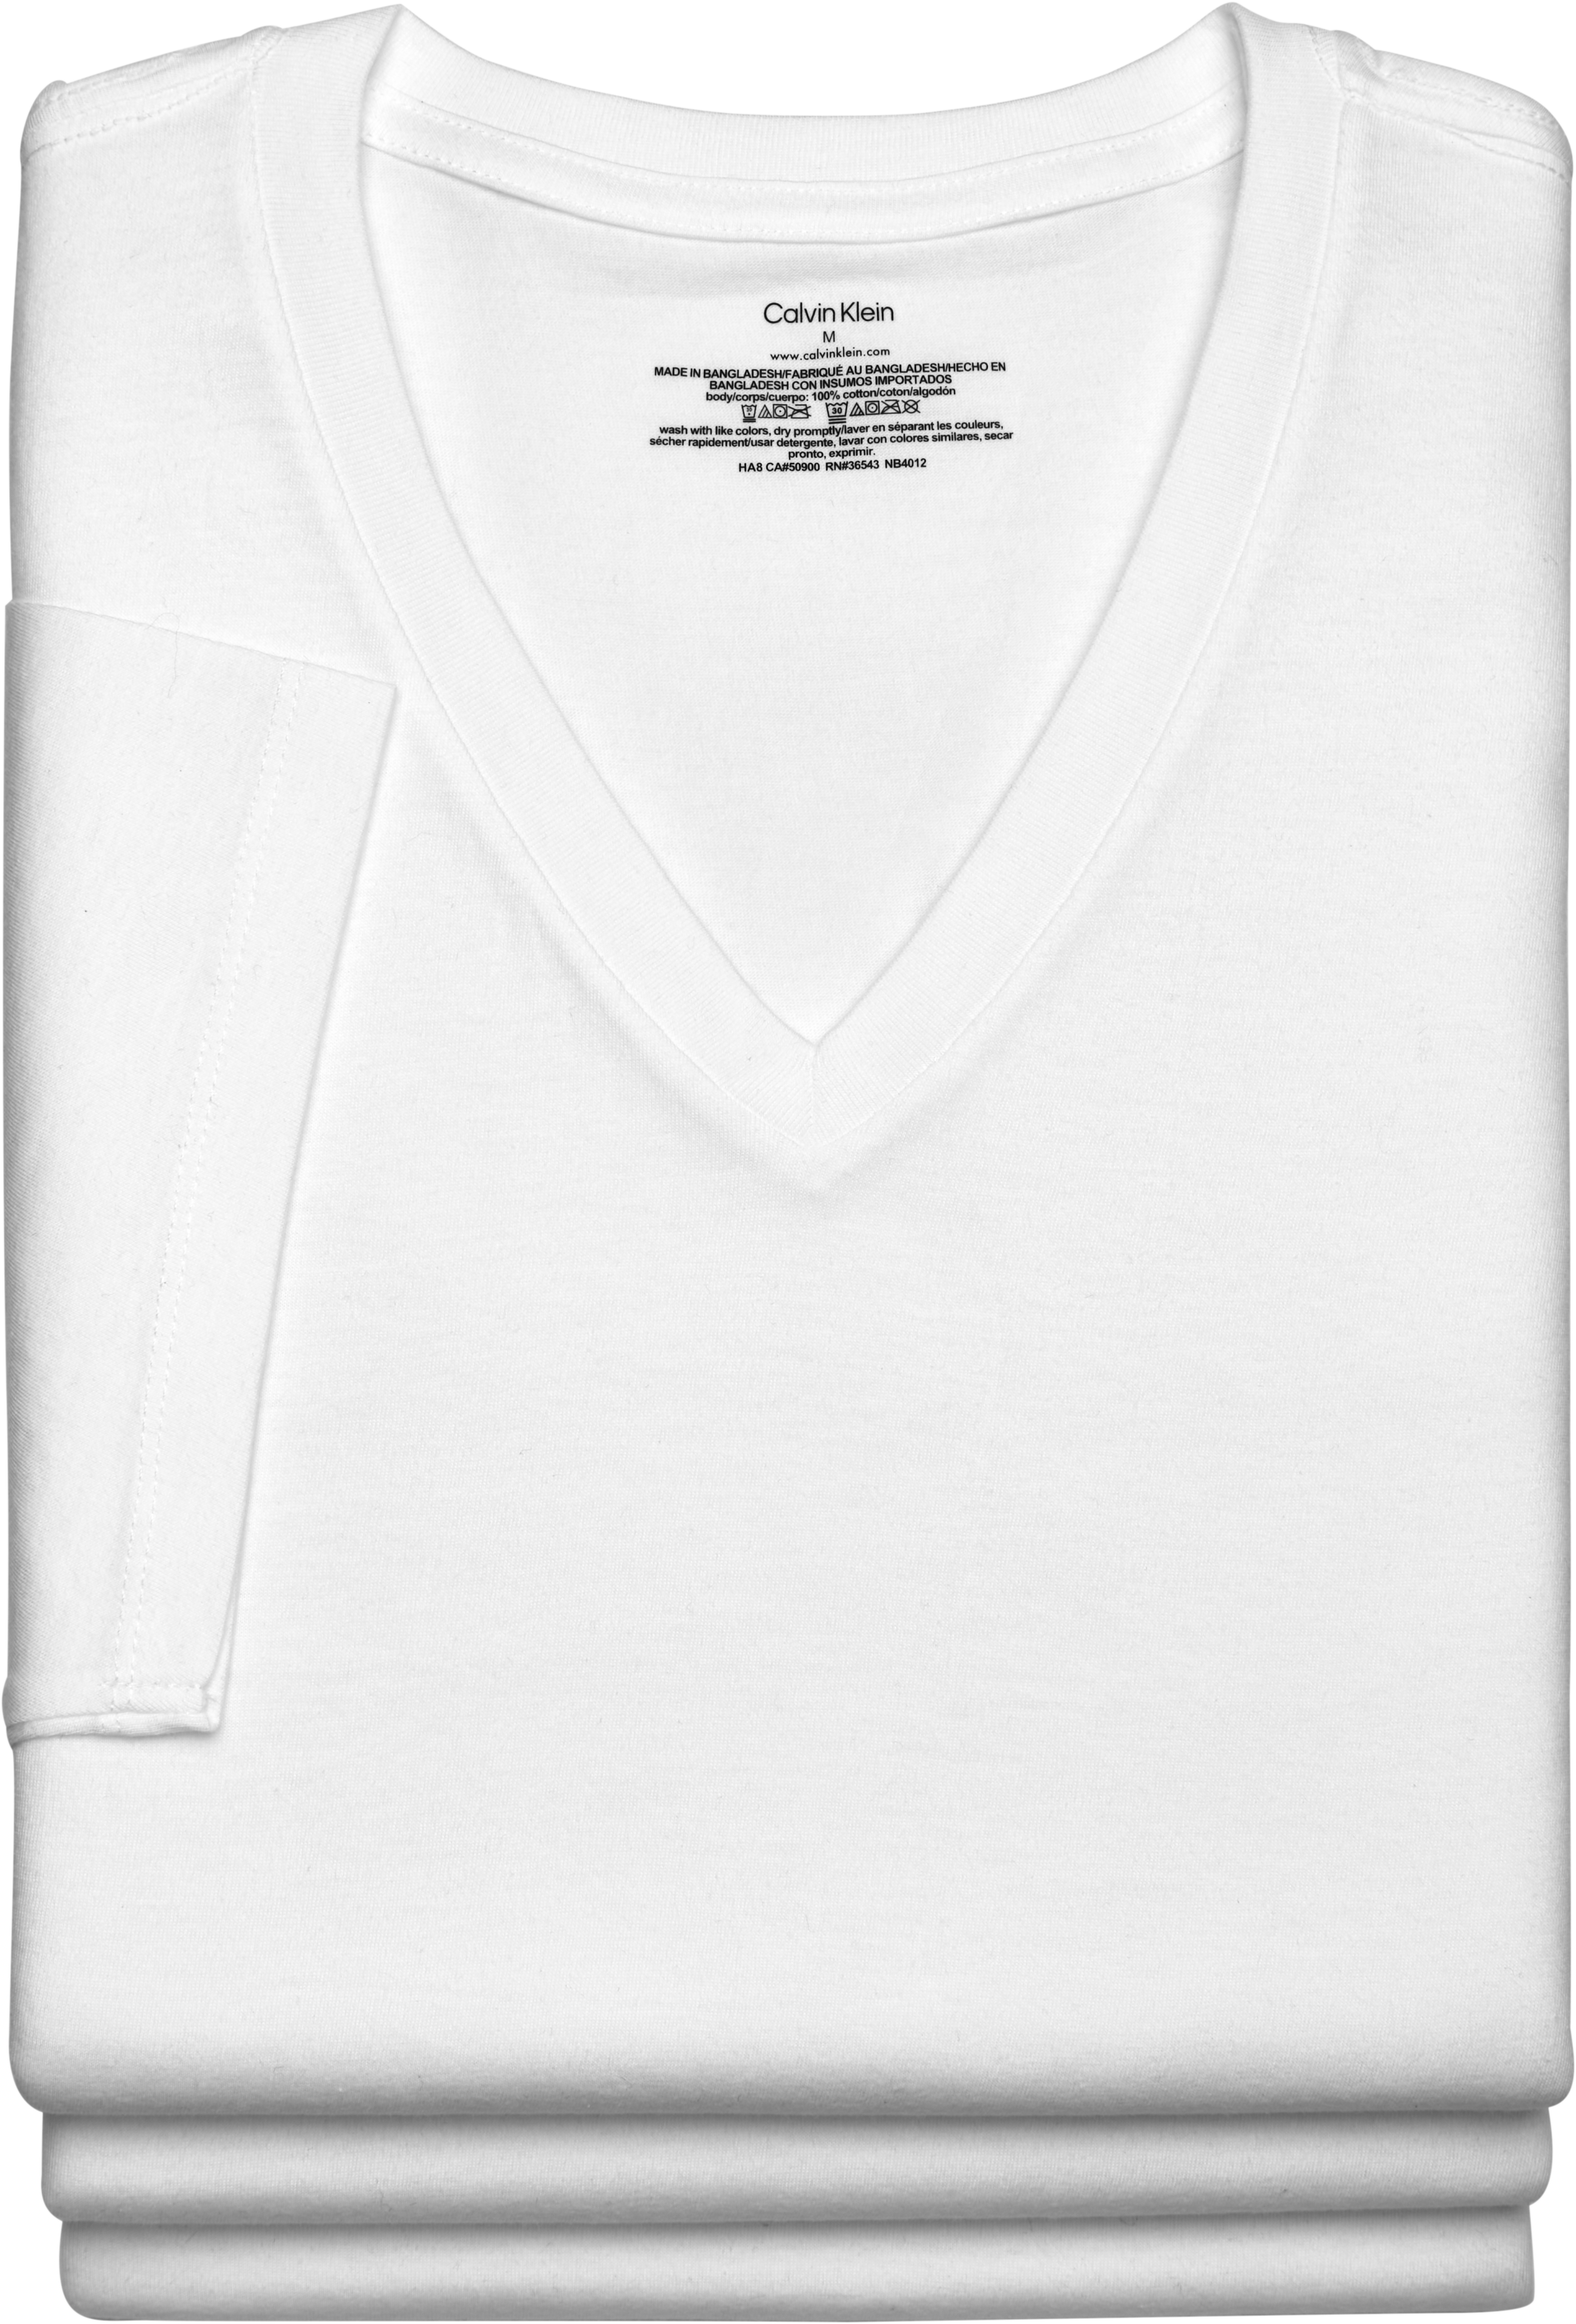 Rue21 3-Pack White Gray Orange T-Shirt Bra Set